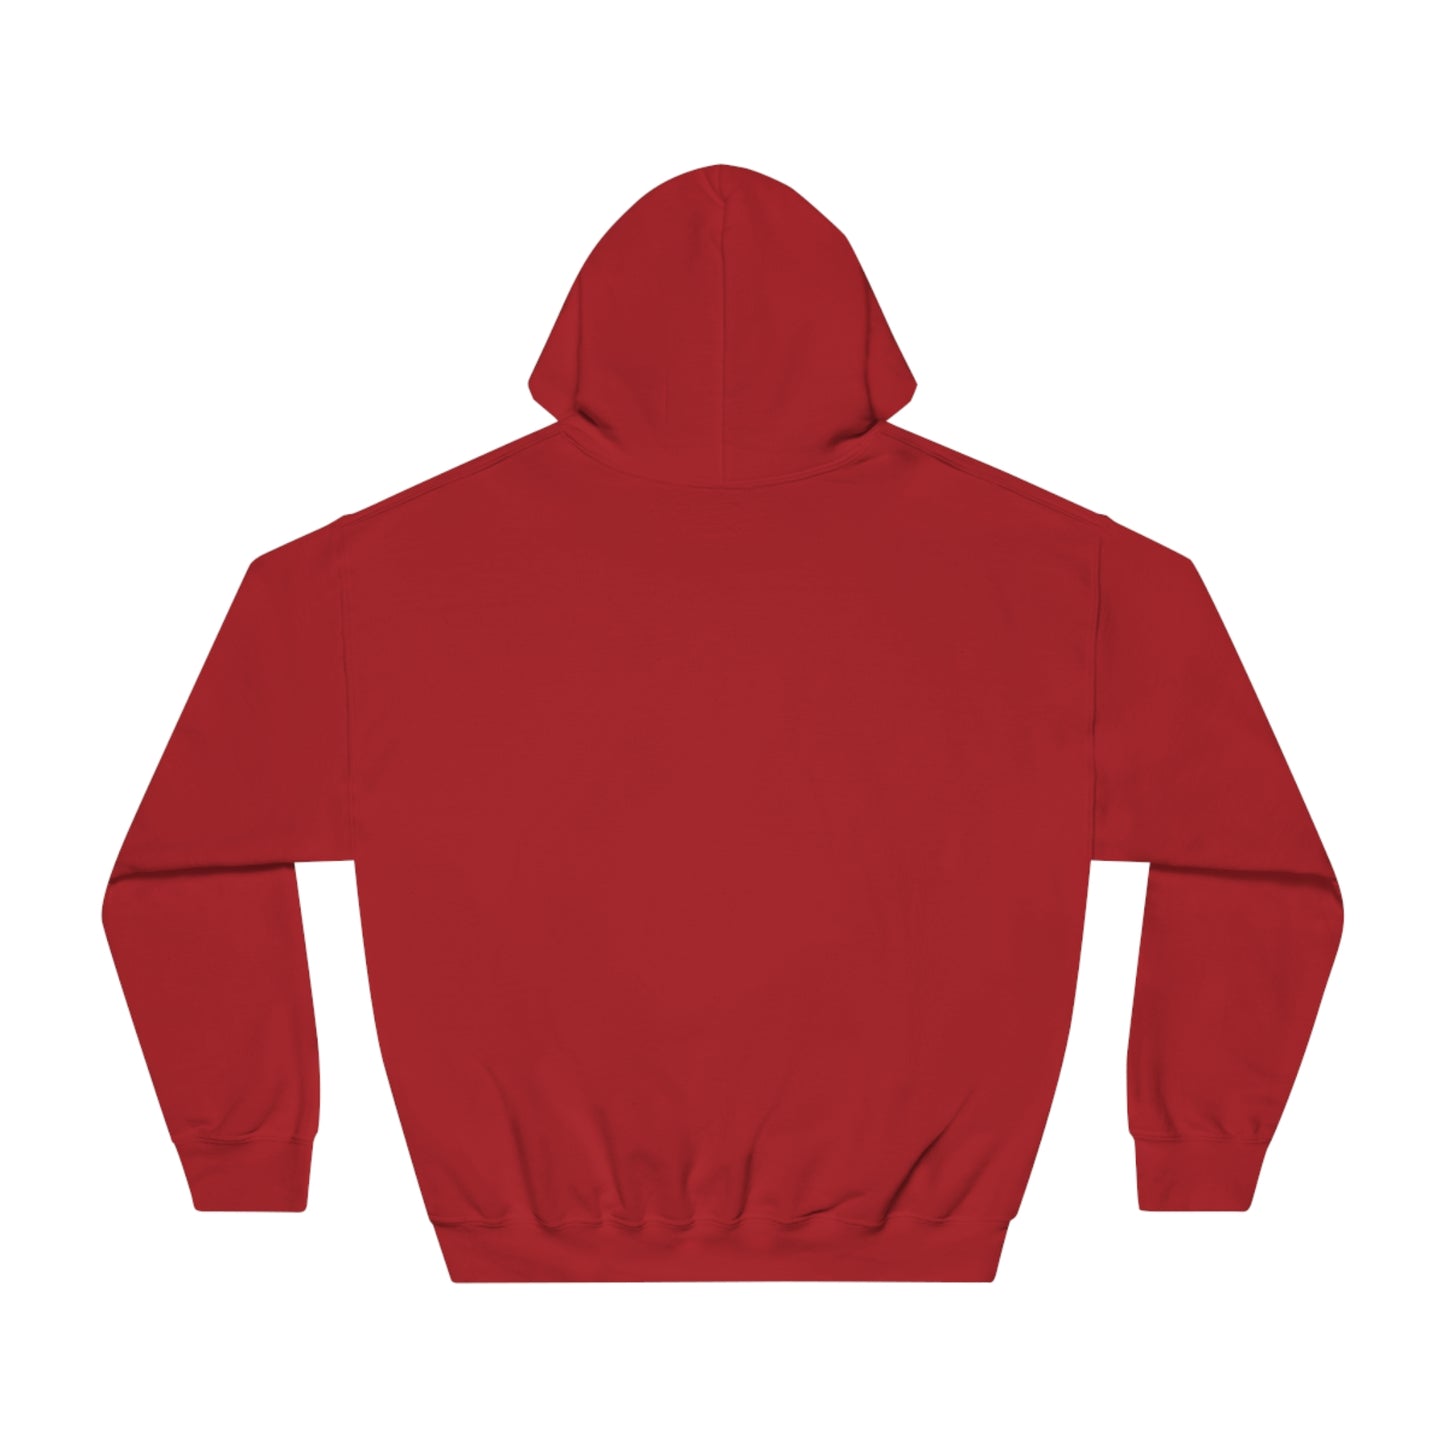 Unisex DryBlend® Hooded Sweatshirt - T-Ball Mom 2